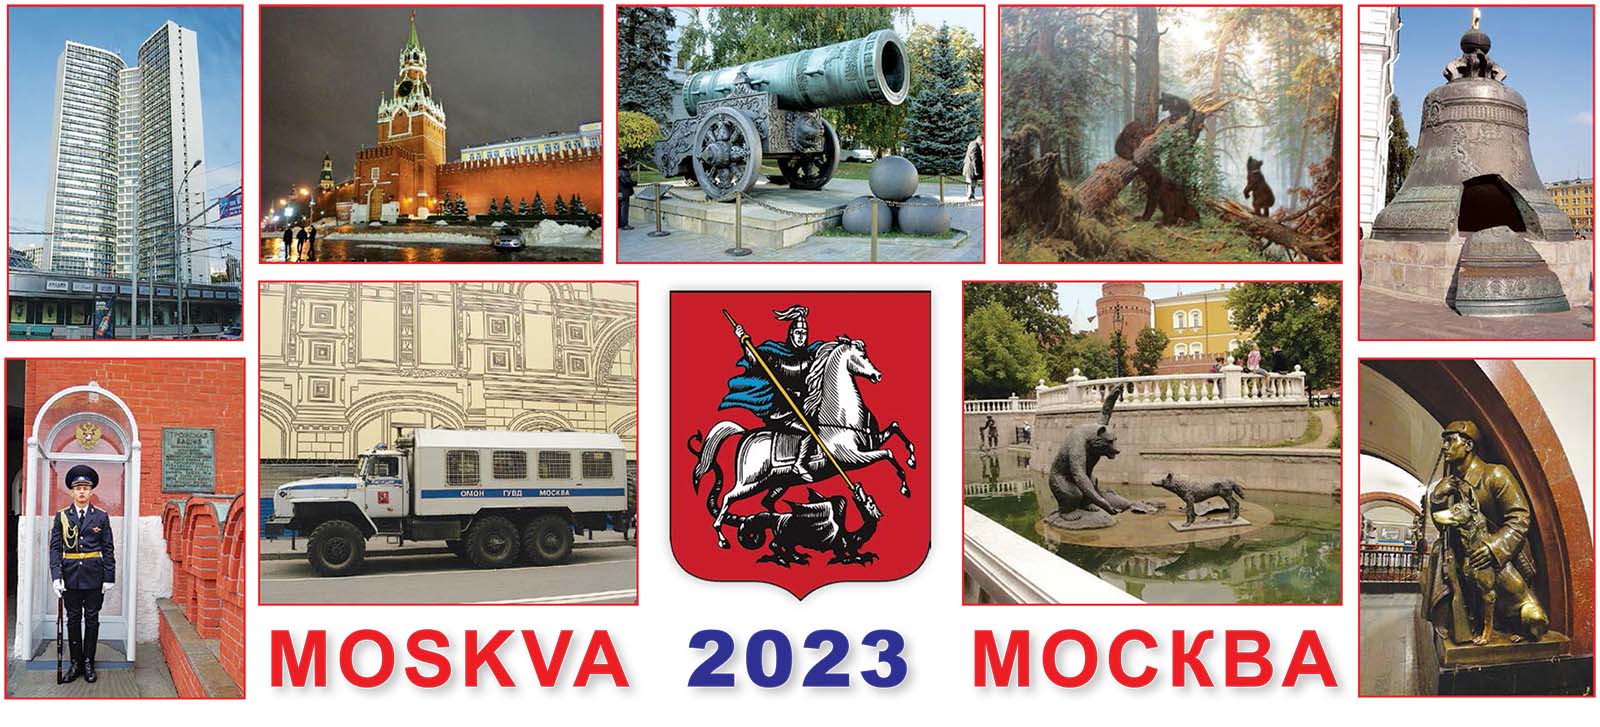 Moskva 2023